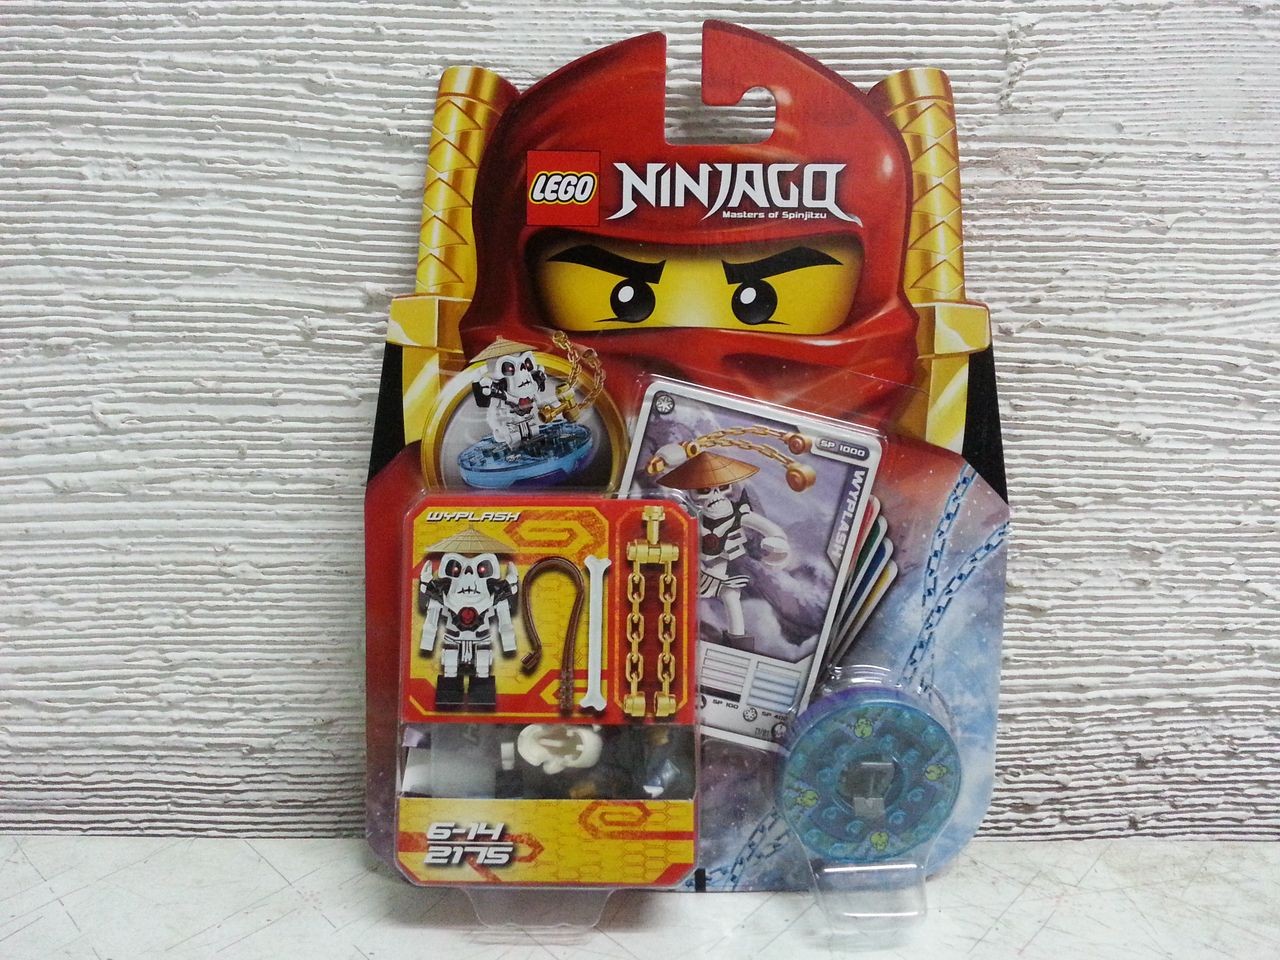 LEGO 2175 Ninjago Wyplash